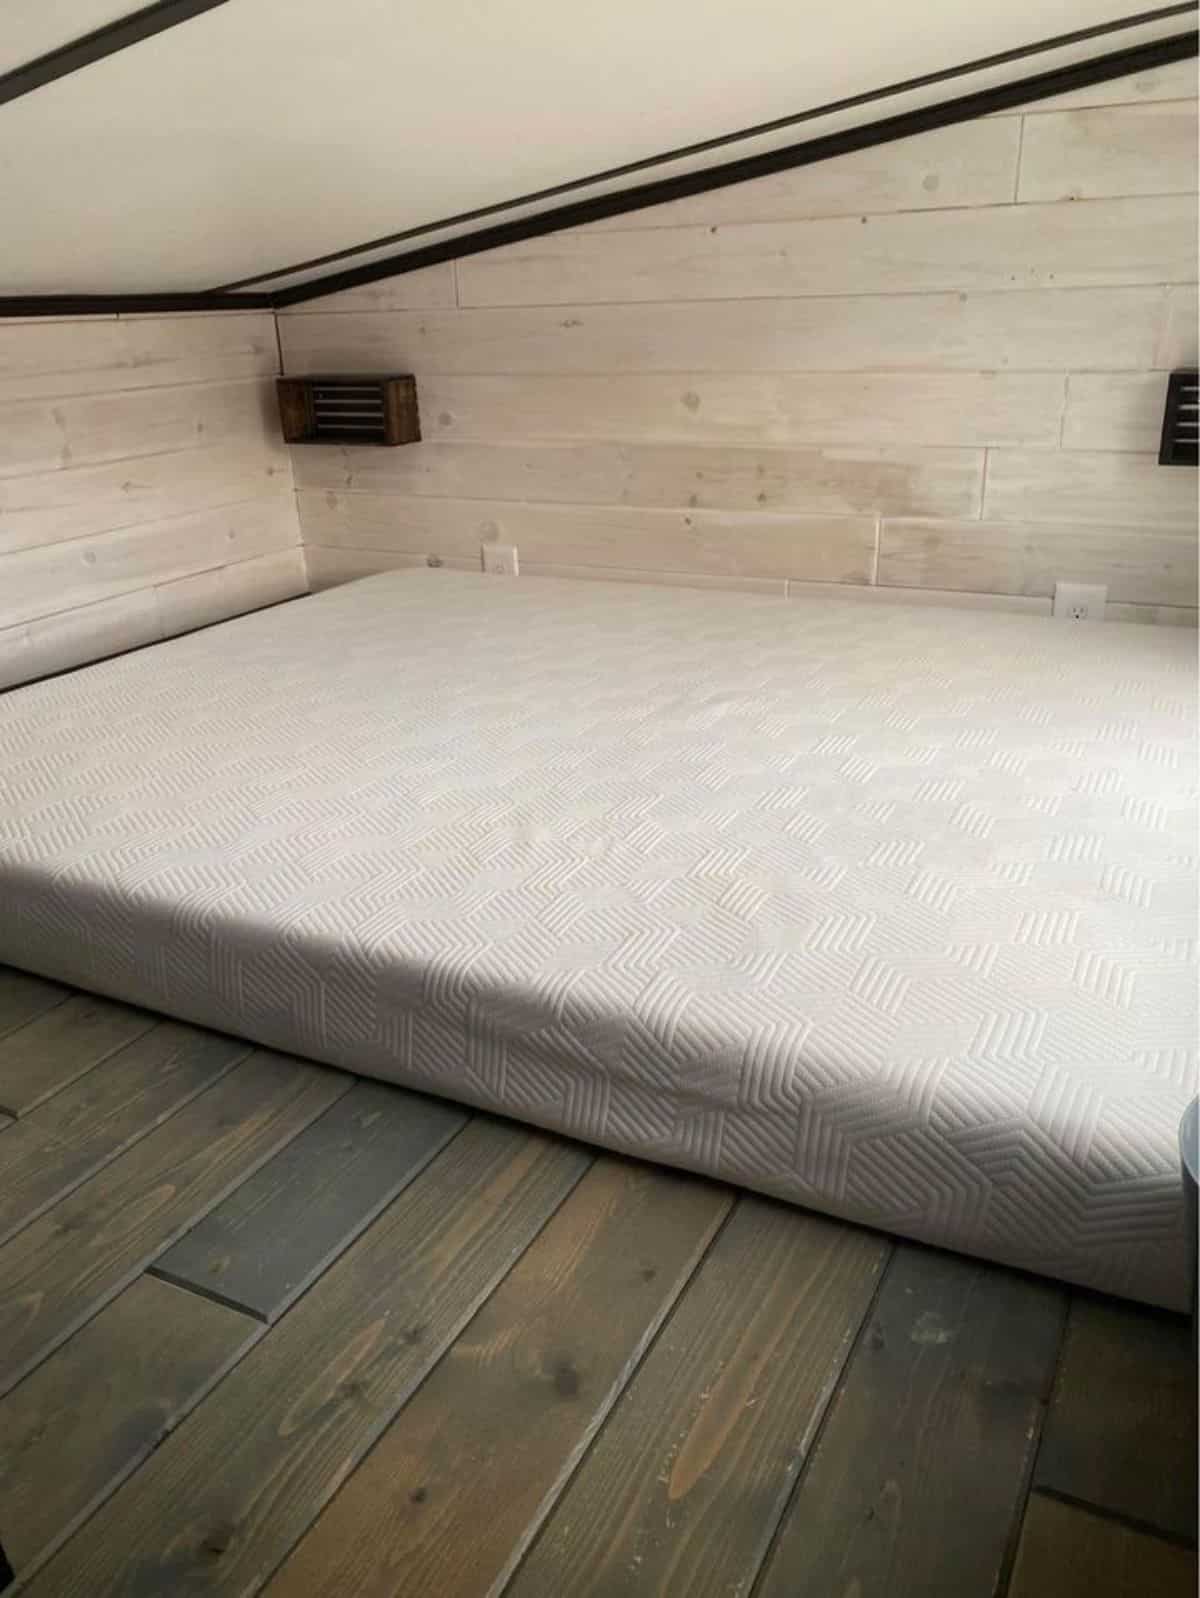 Loft bedroom has a queen mattress